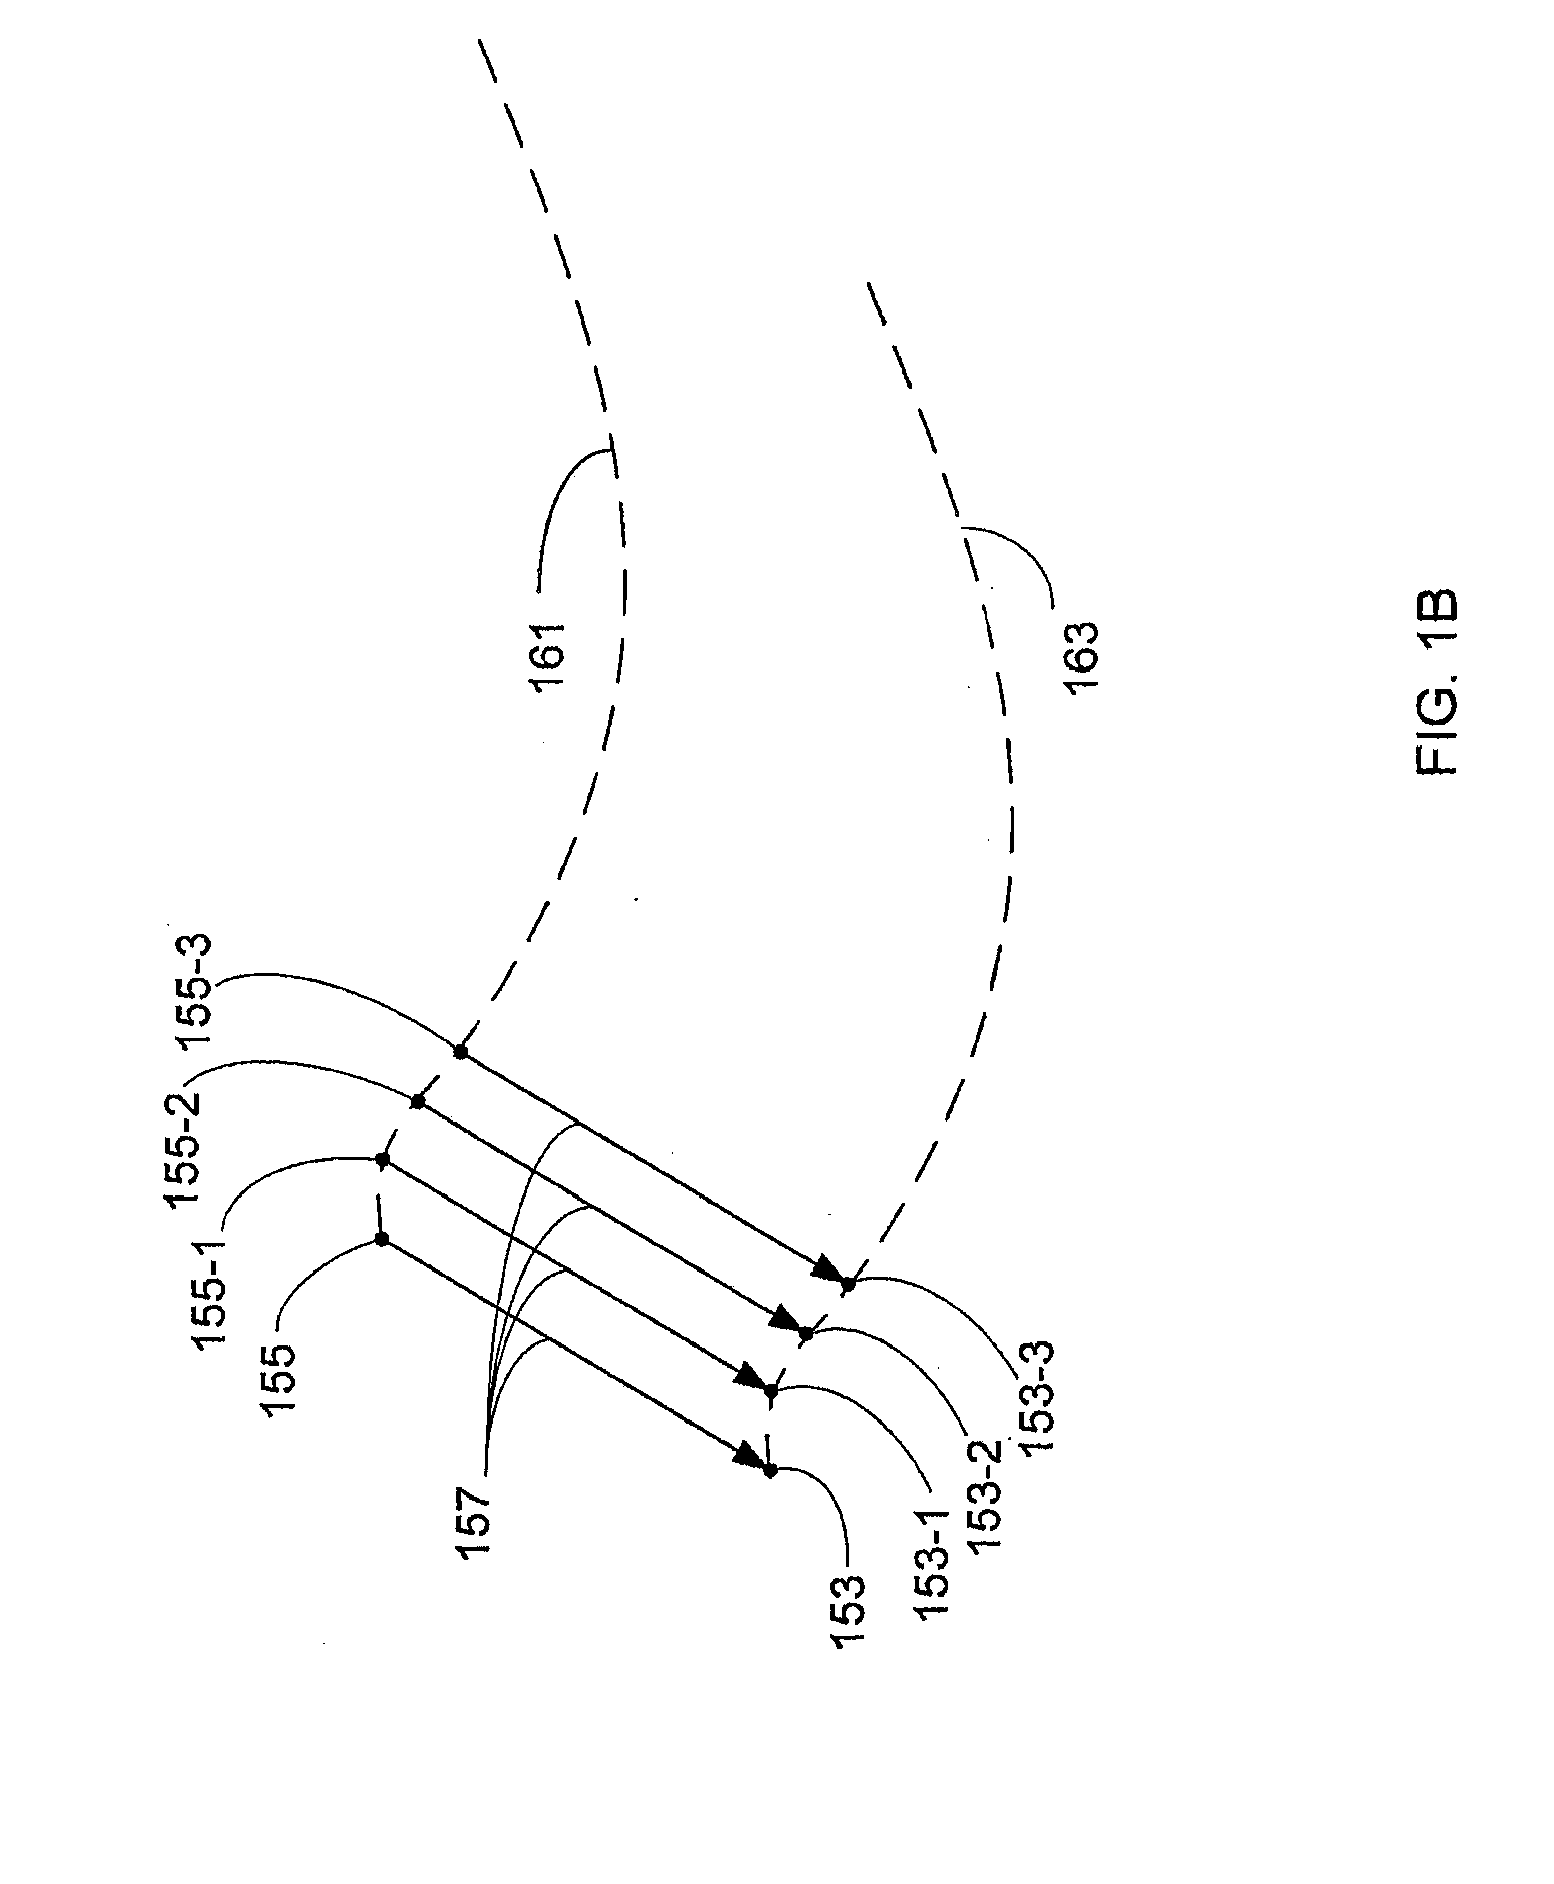 Navigation signal receiver trajectory determination